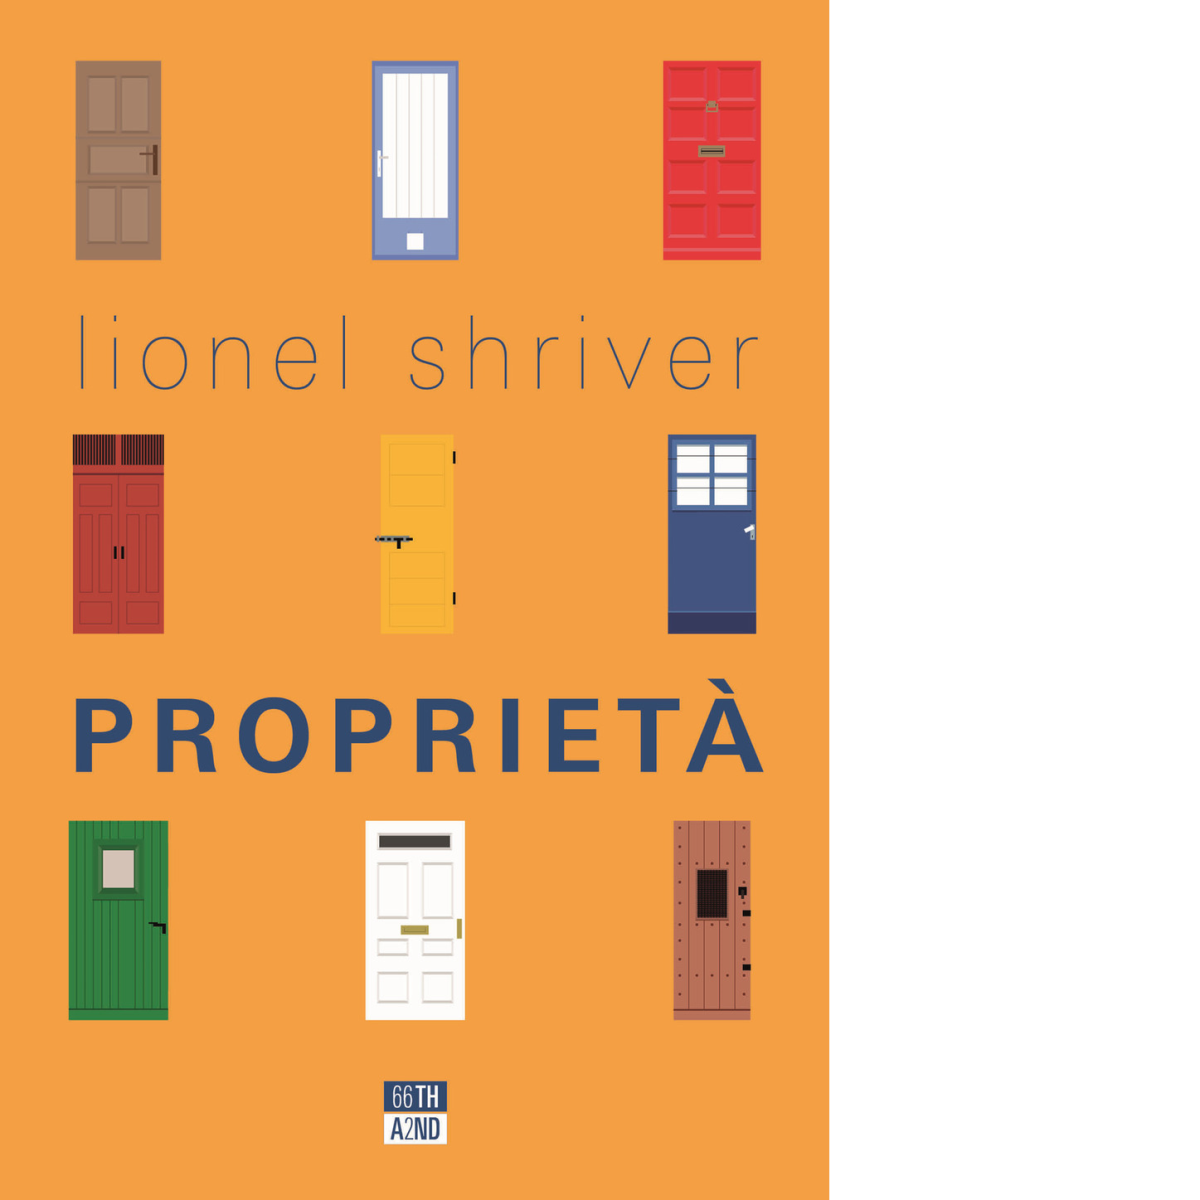 Propriet? di Lionel Shriver,  2021,  66th And 2nd